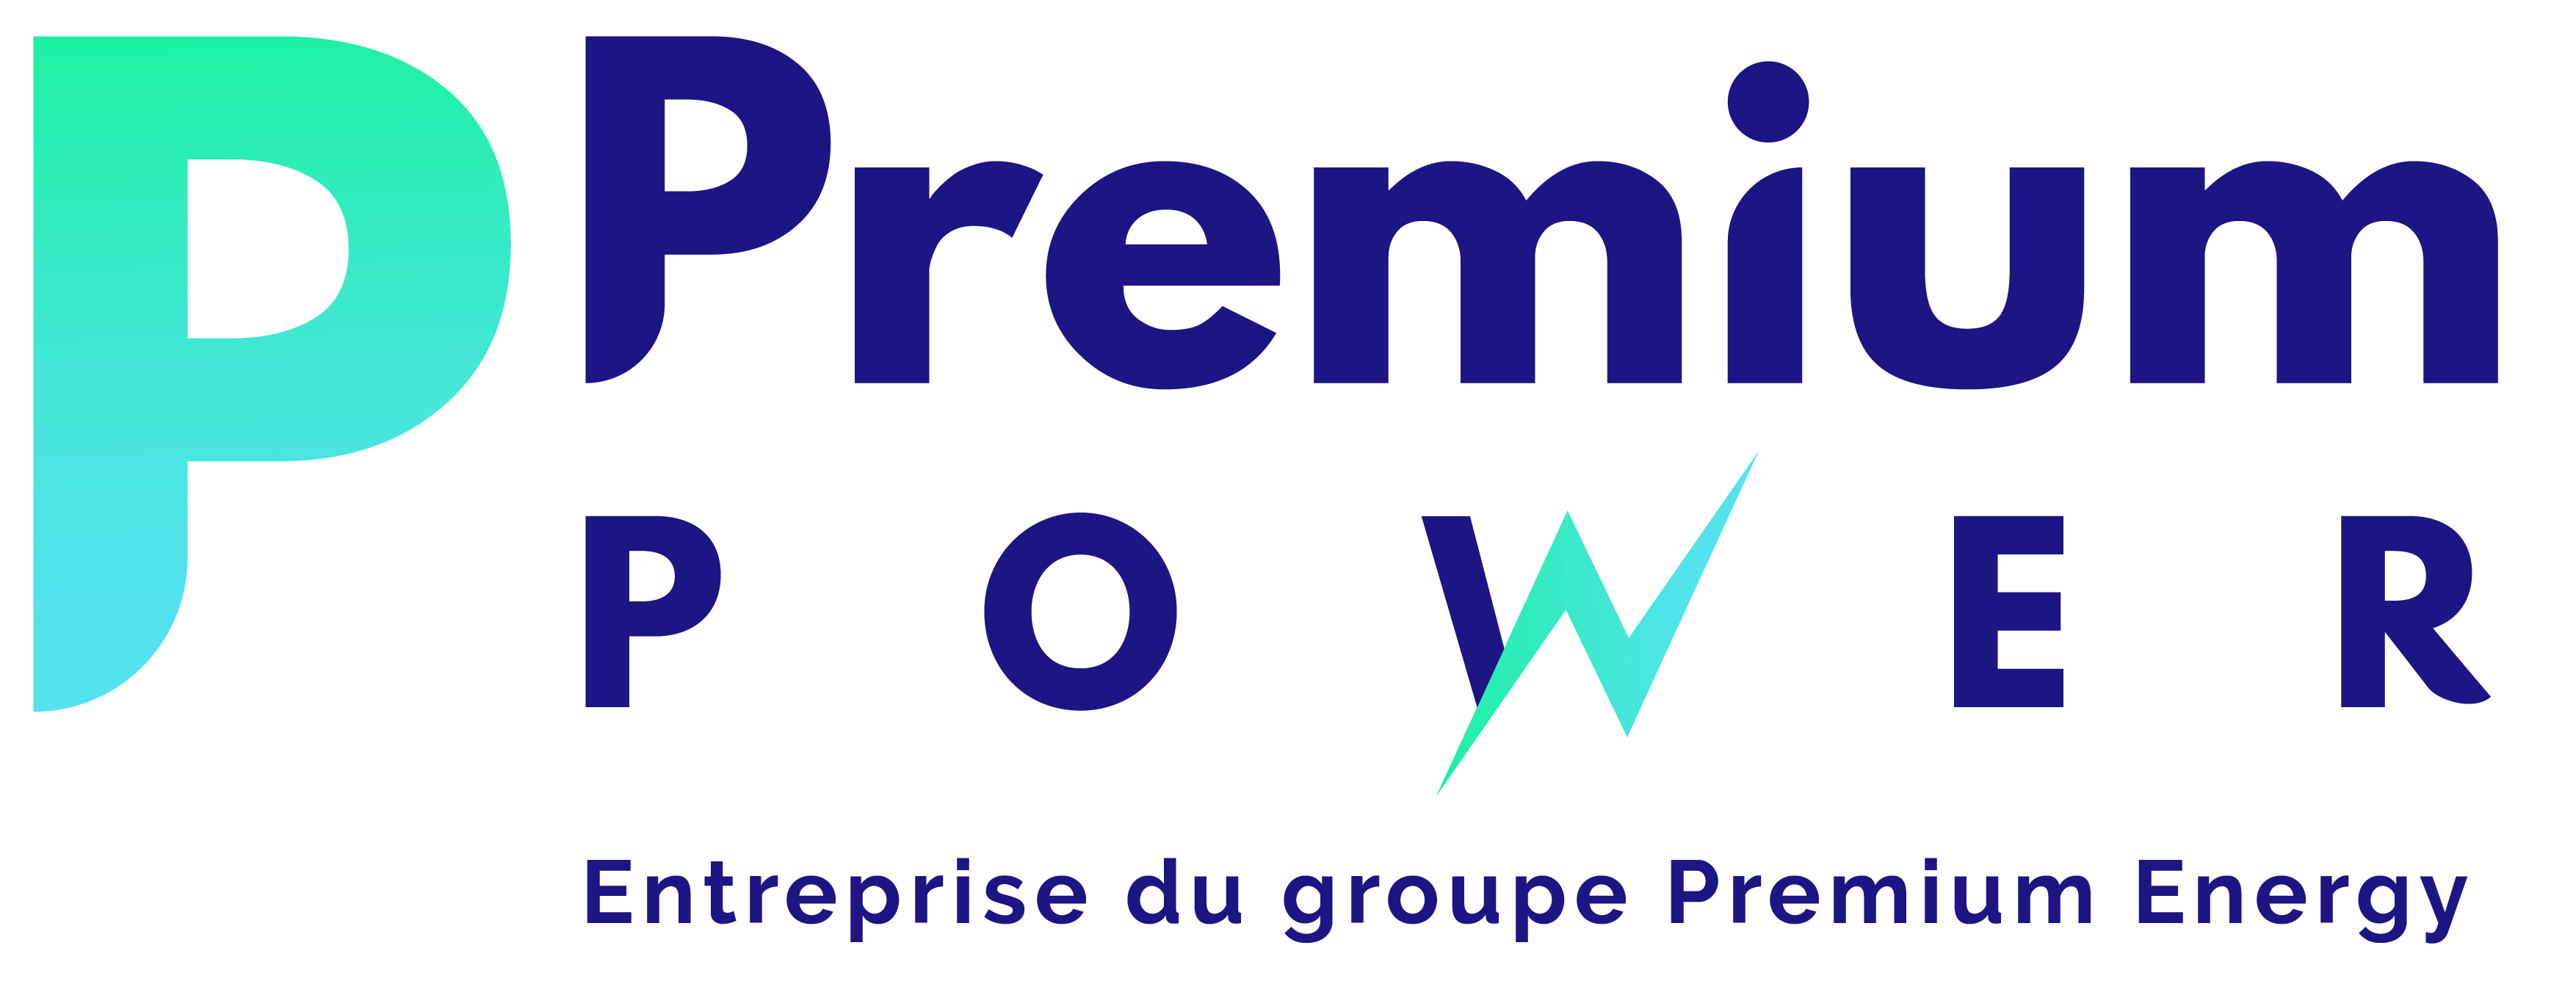 Premium Power logo